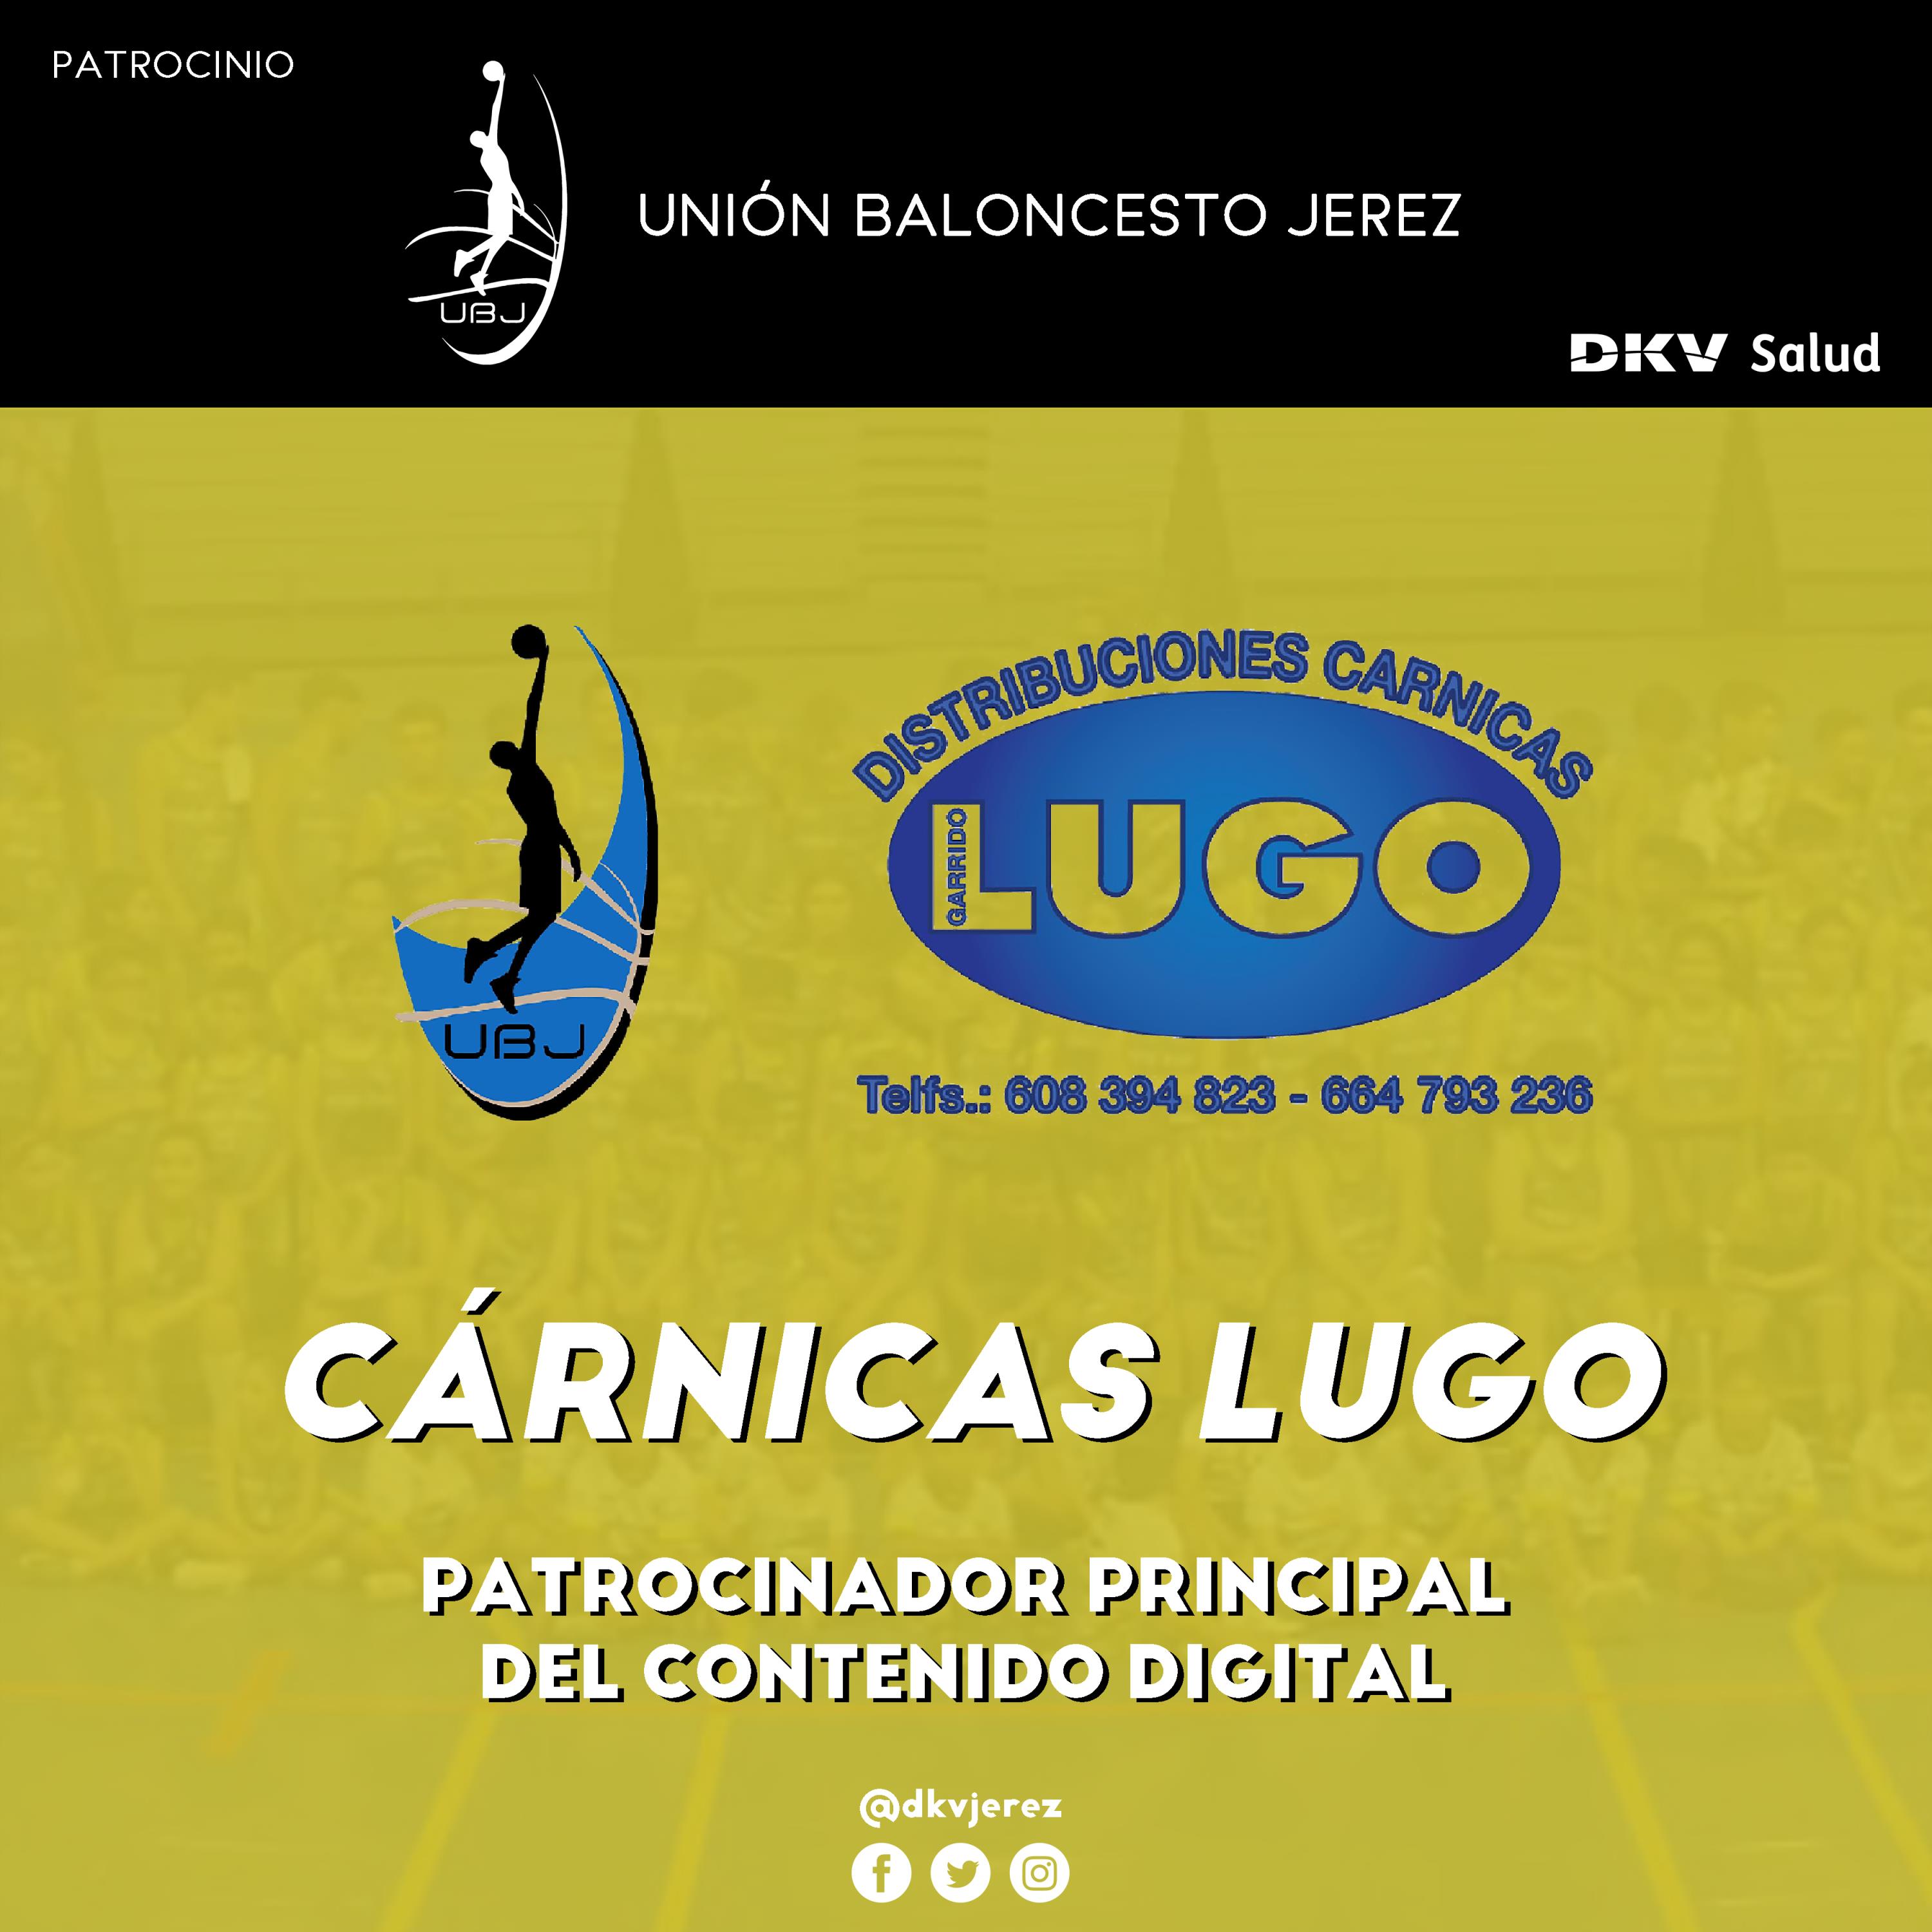 Acuerdo de patrocinio DKV Jerez-Cárnicas Lugo